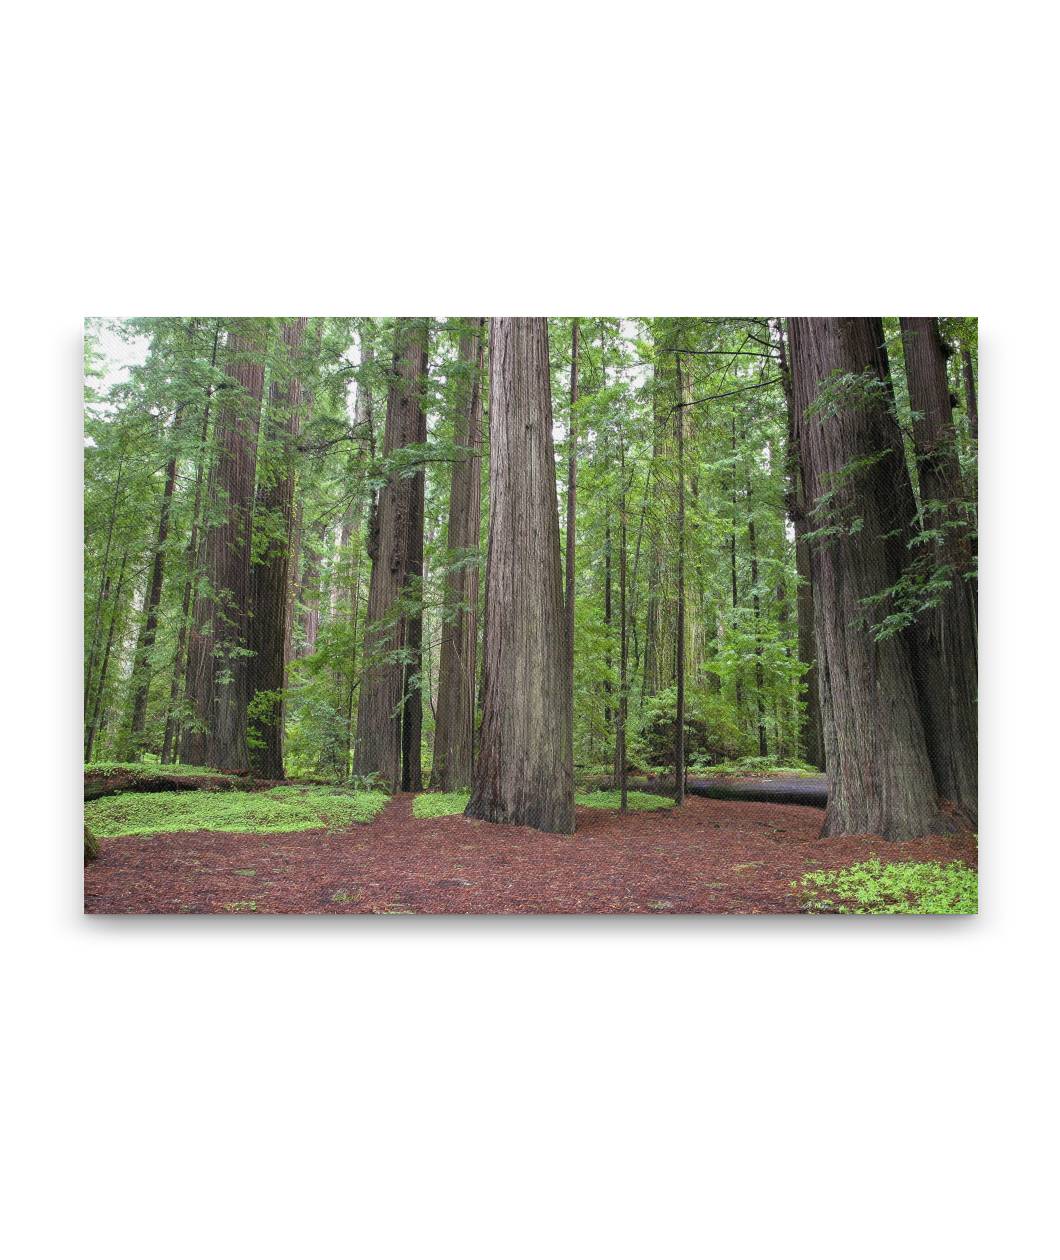 Humboldt Redwoods State Park, California